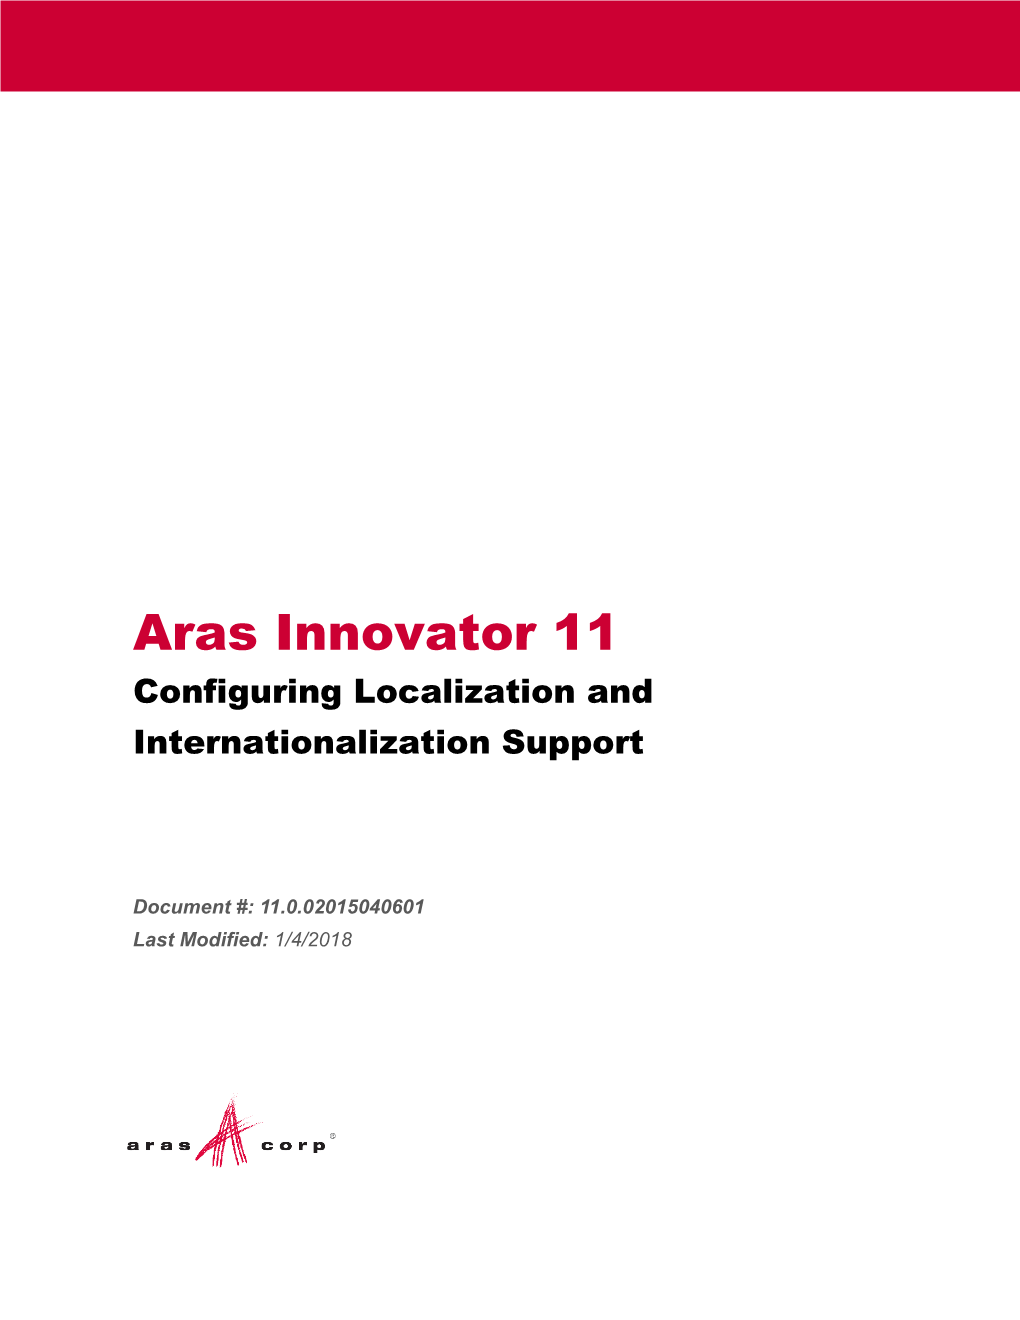 Aras Innovator 11.0 Configuring Internationalization